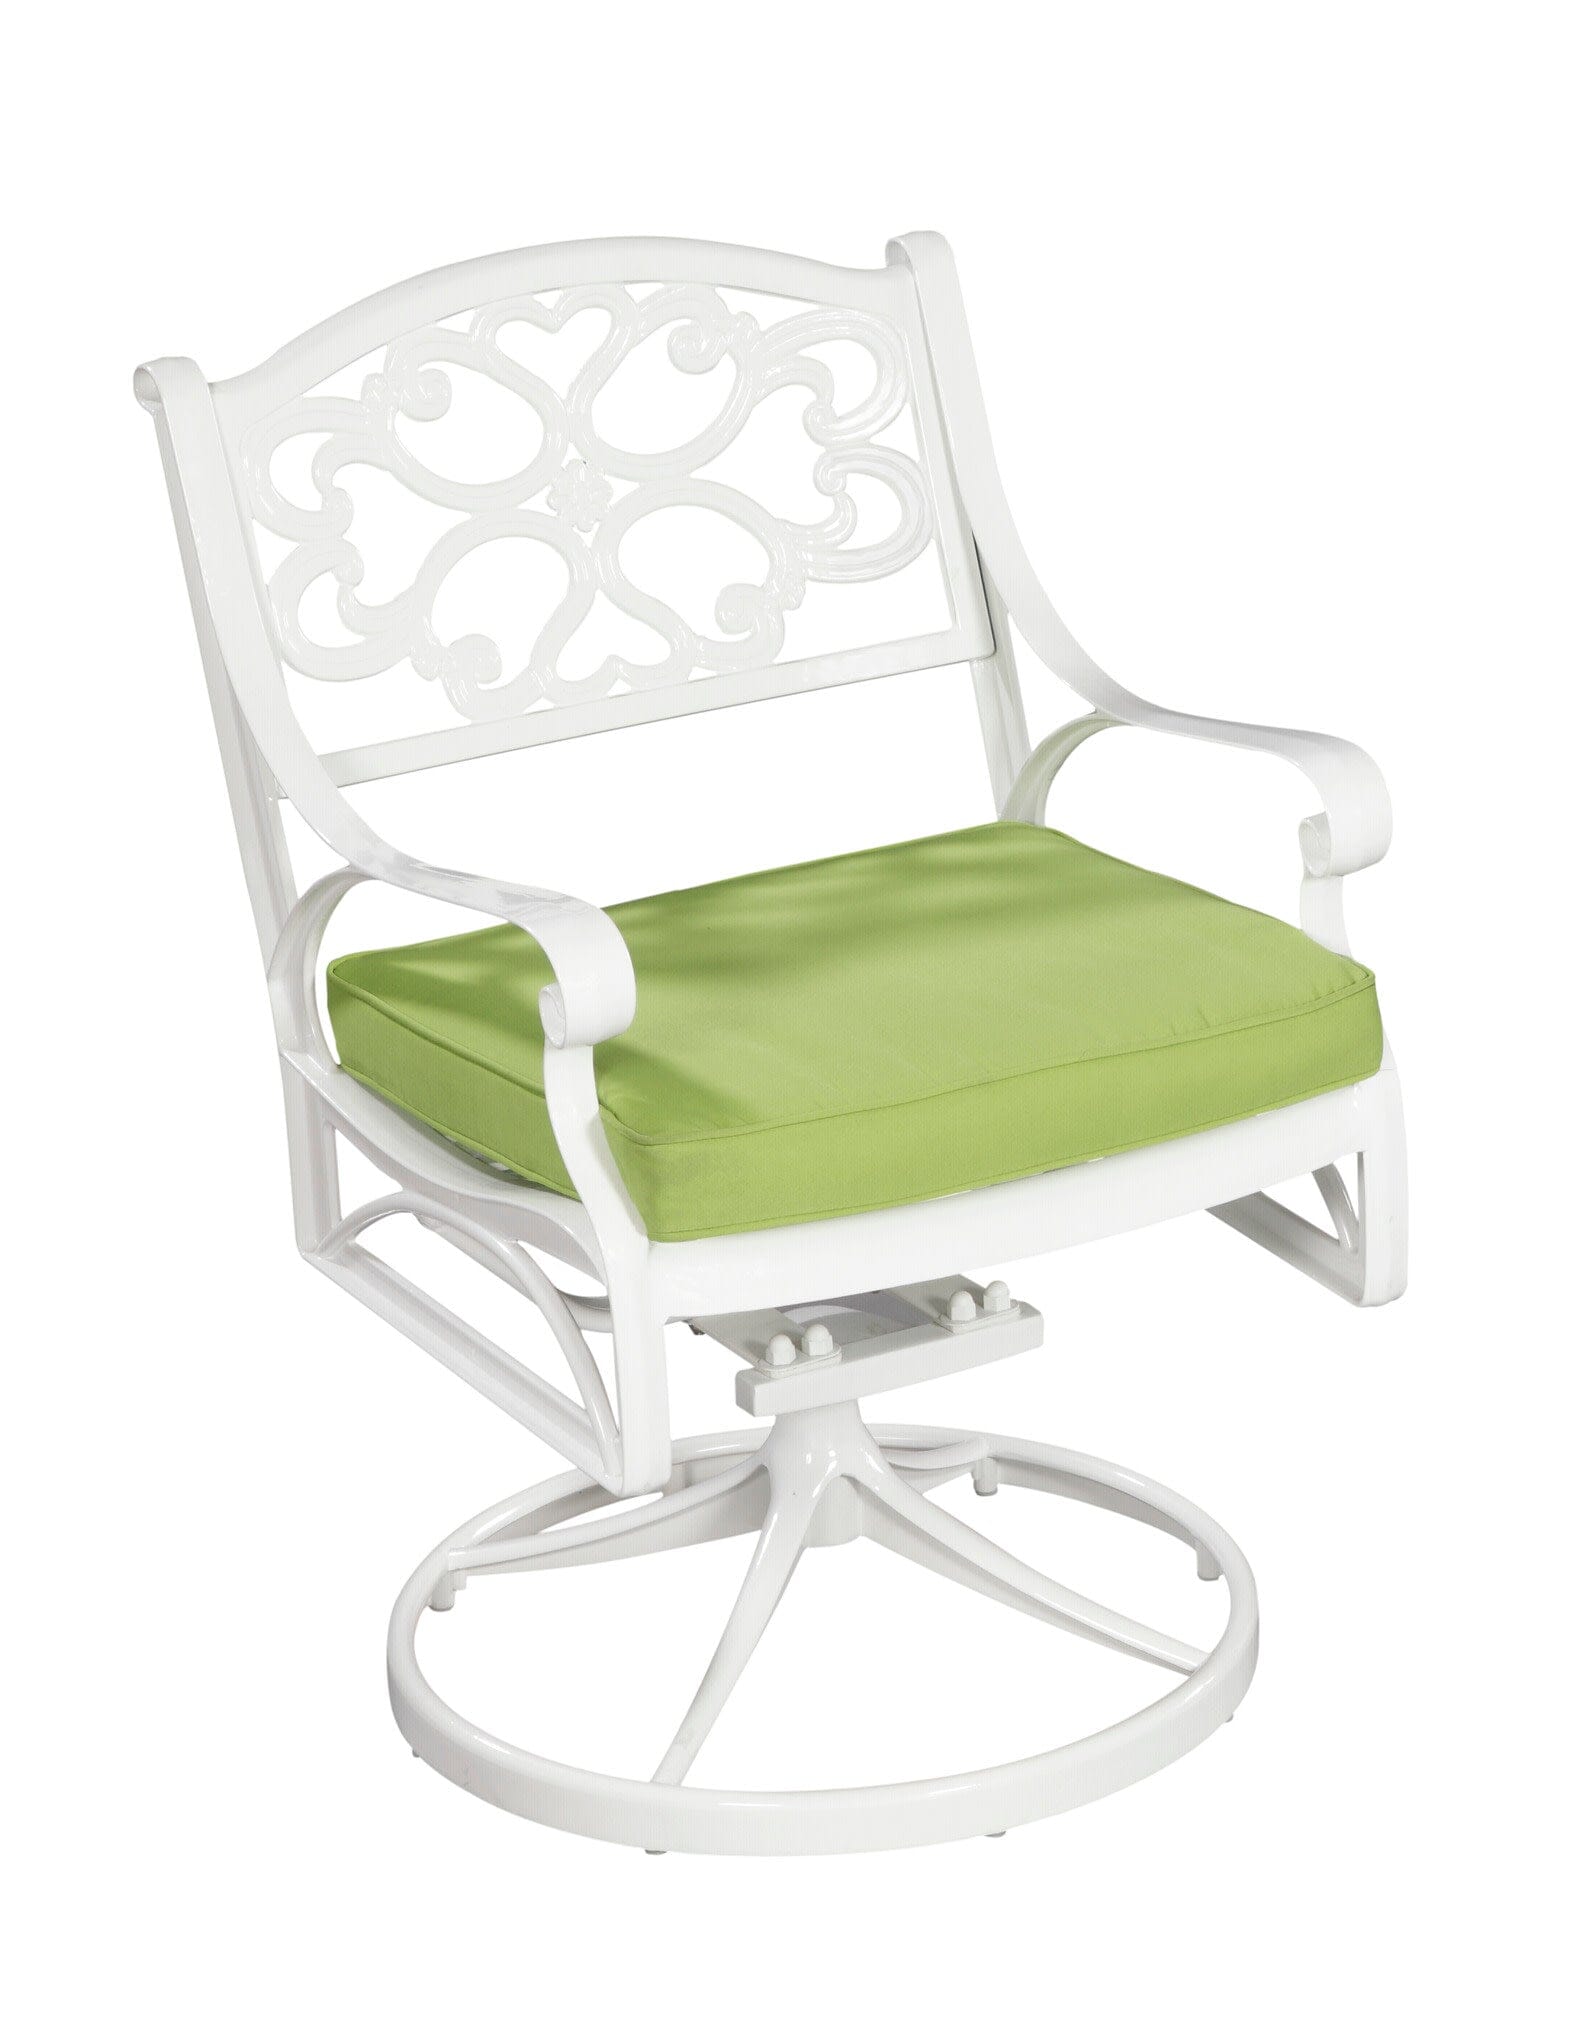 Traditional Outdoor Swivel Chair By Sanibel Outdoor Seating Sanibel